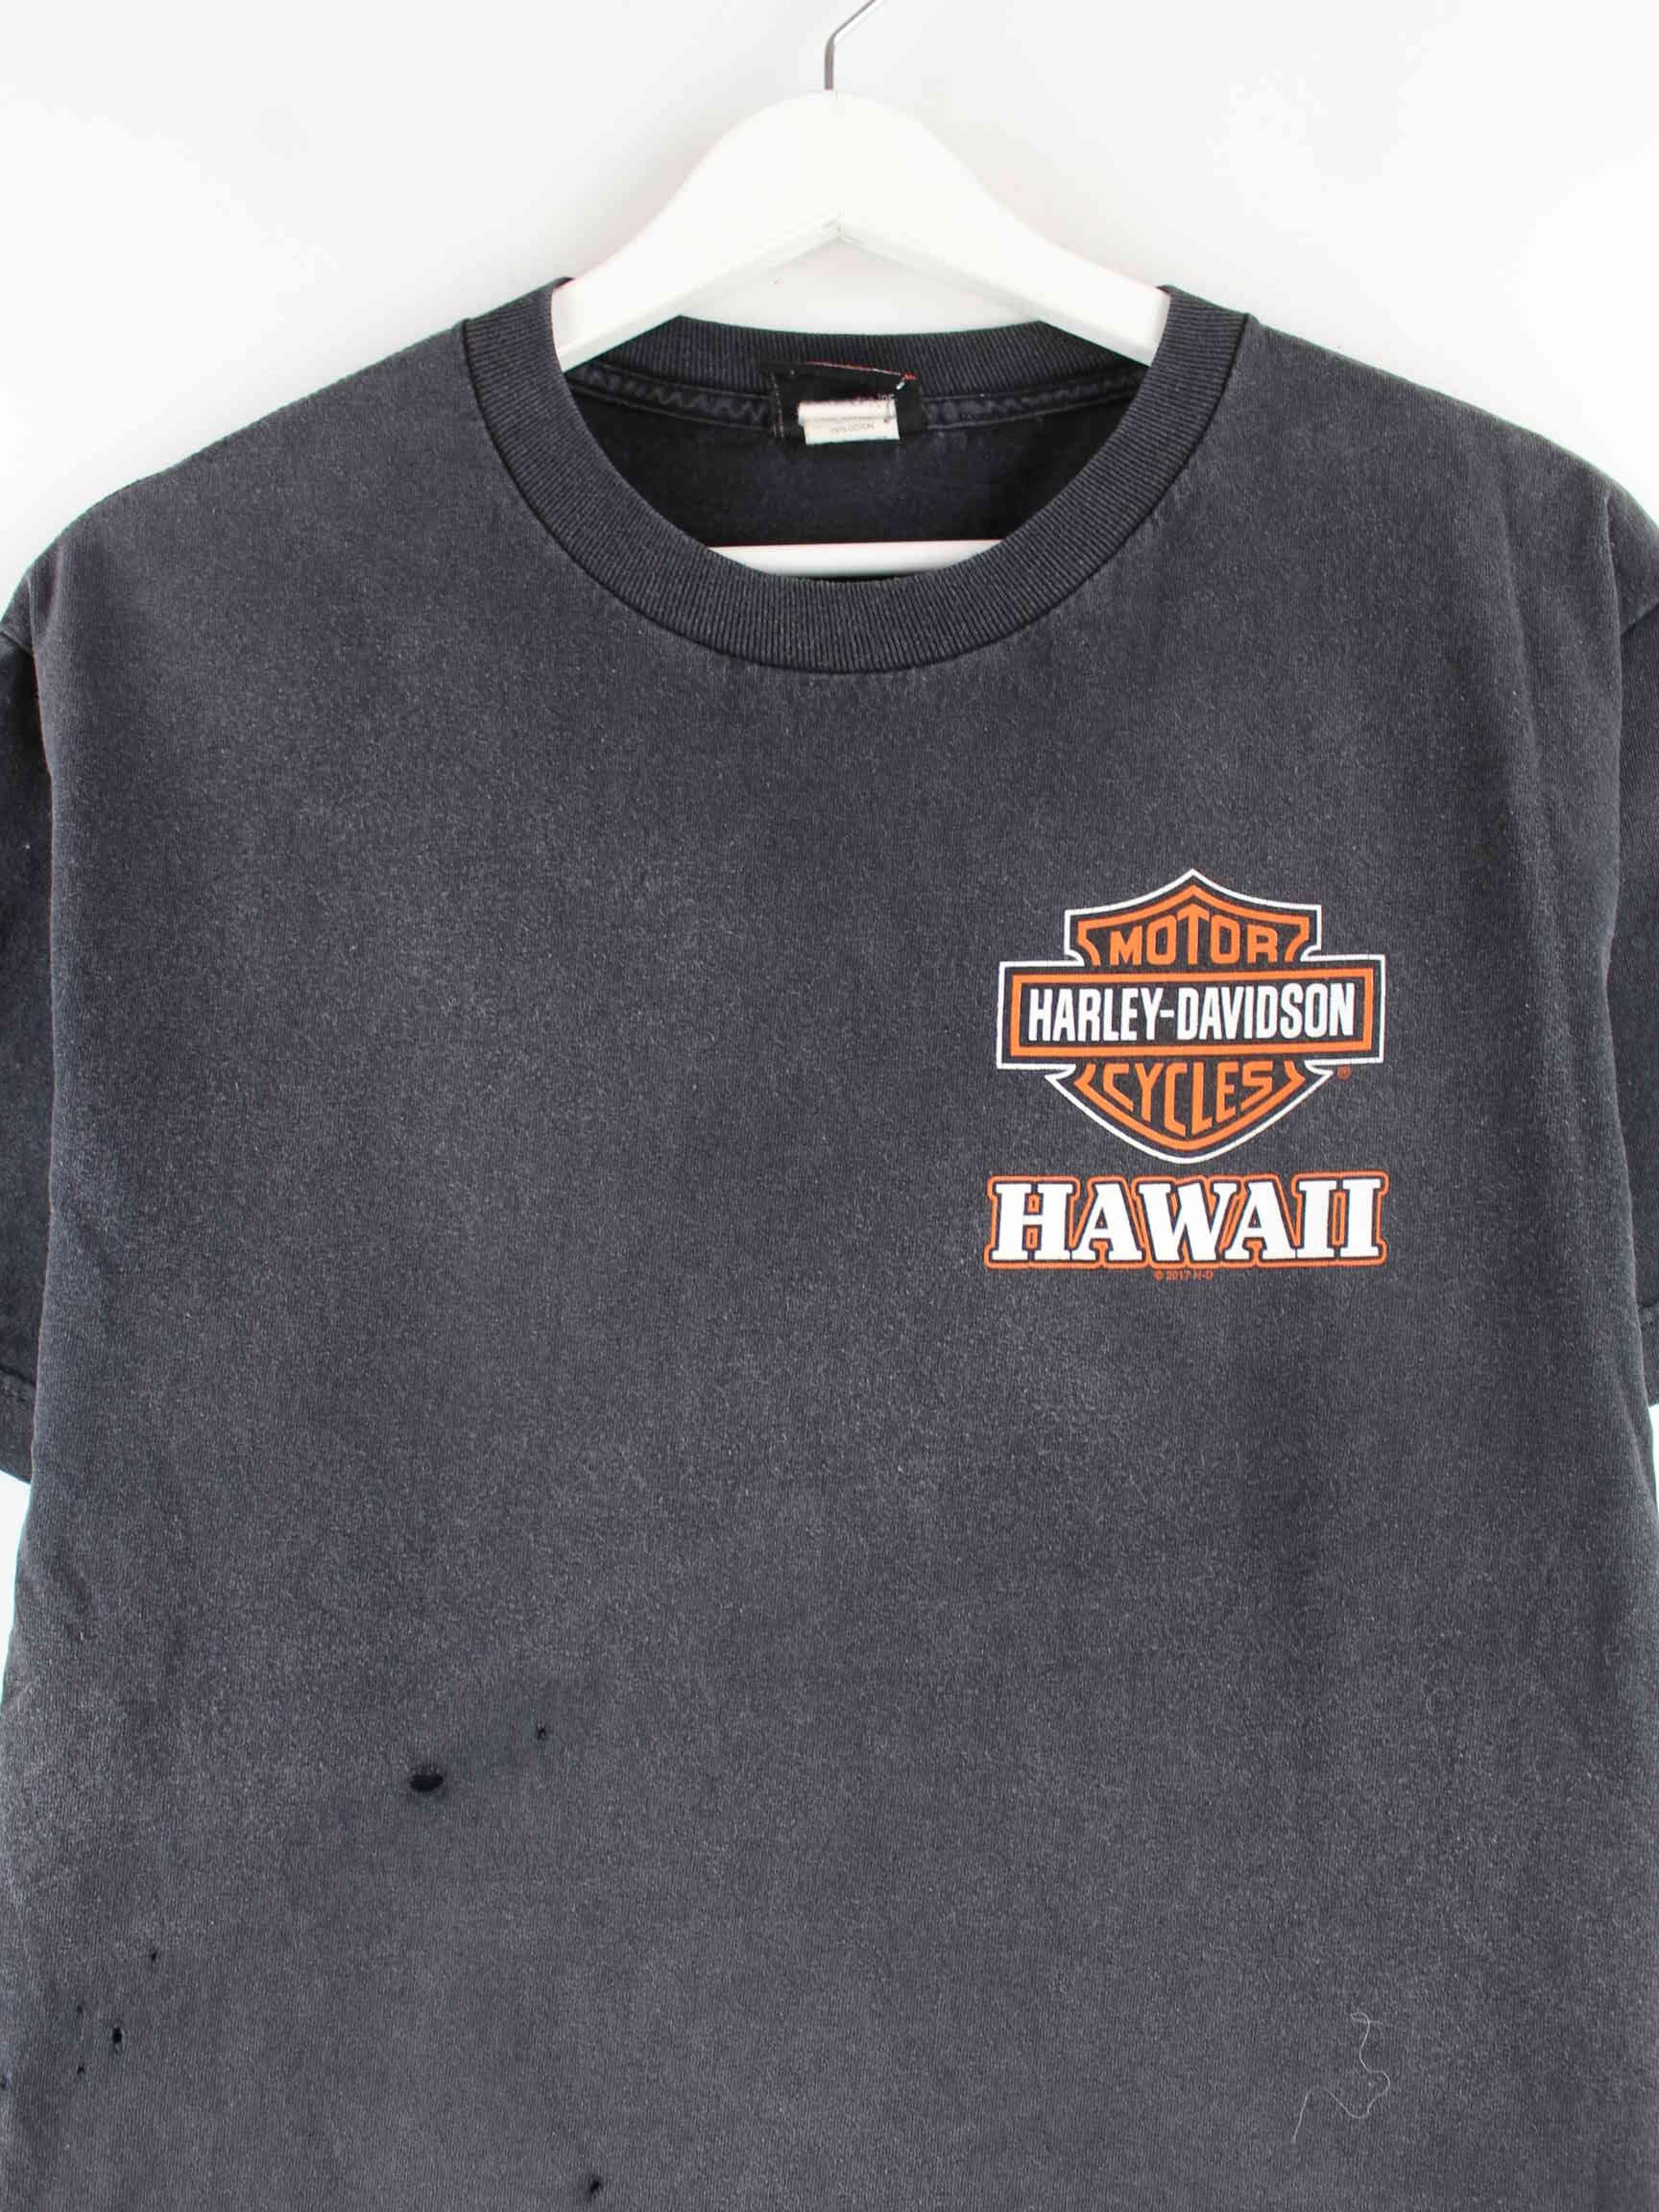 Harley Davidson 2017 Hawaii Print T-Shirt Schwarz M (detail image 1)